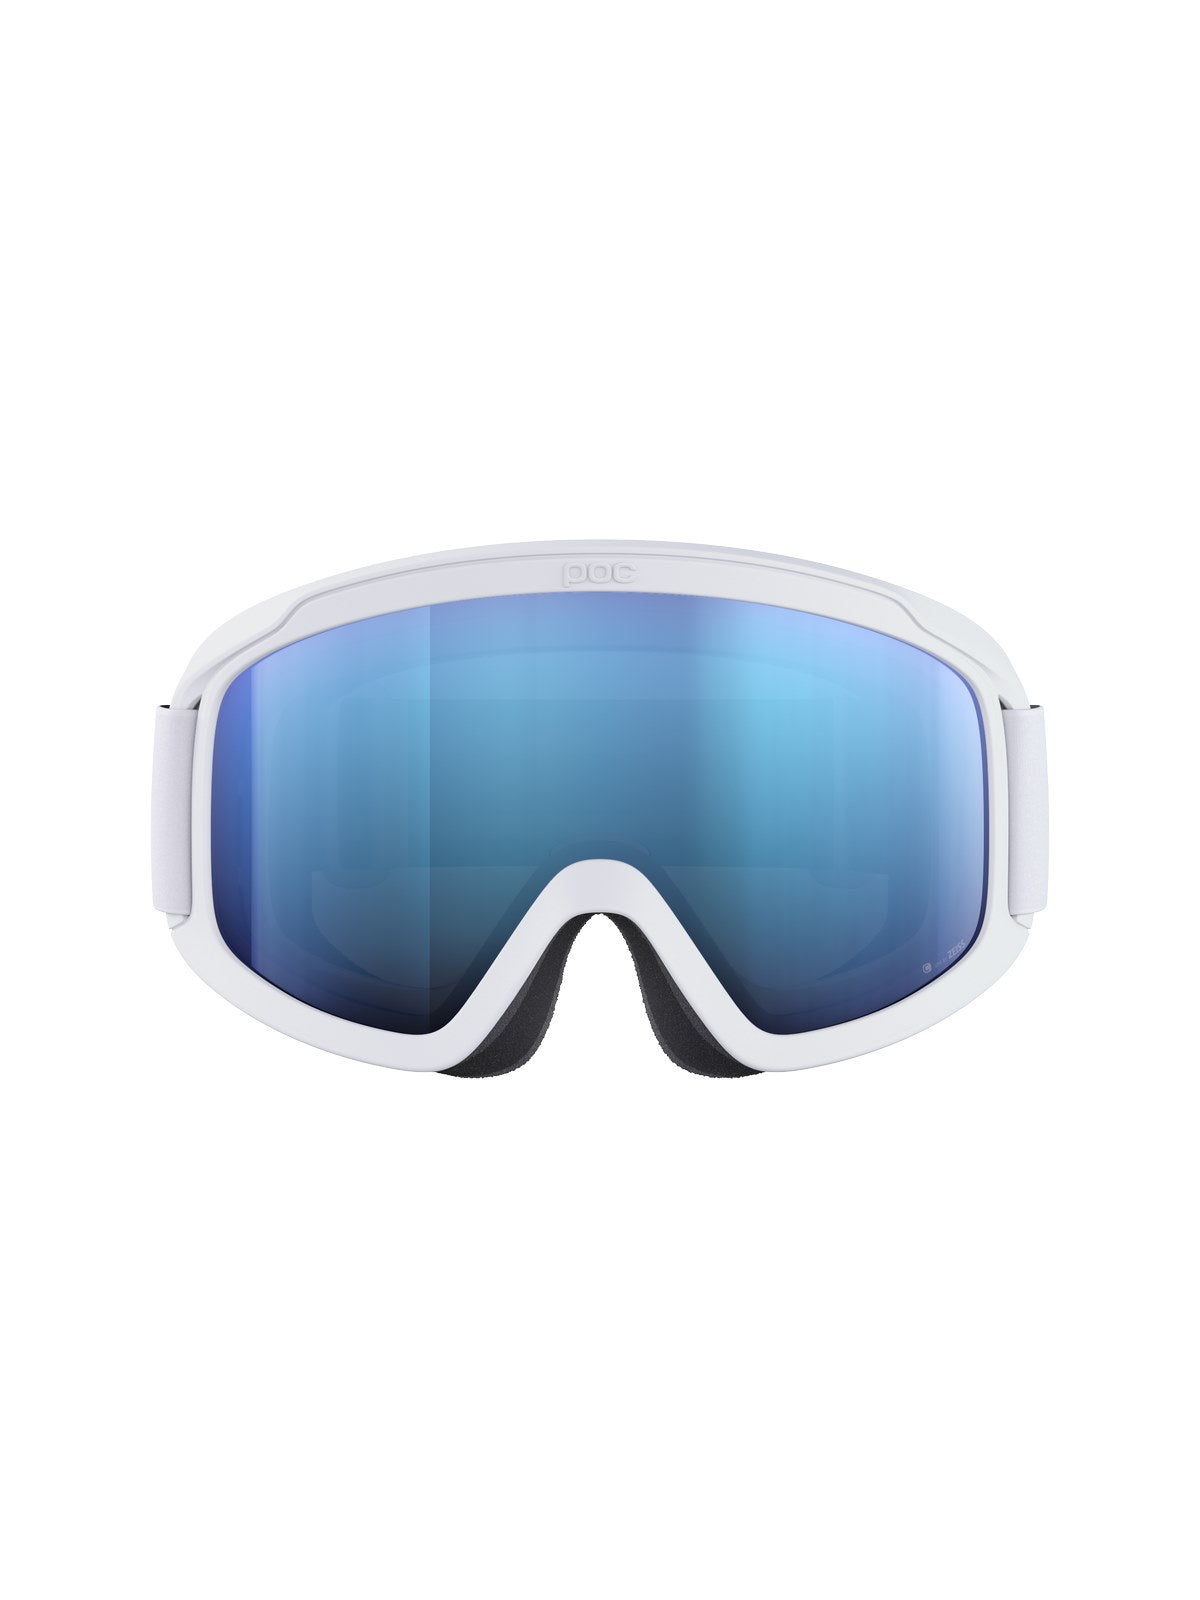 Gogle narciarskie POC Opsin - Hydr. White|Pt. Sunny Blue Cat 2